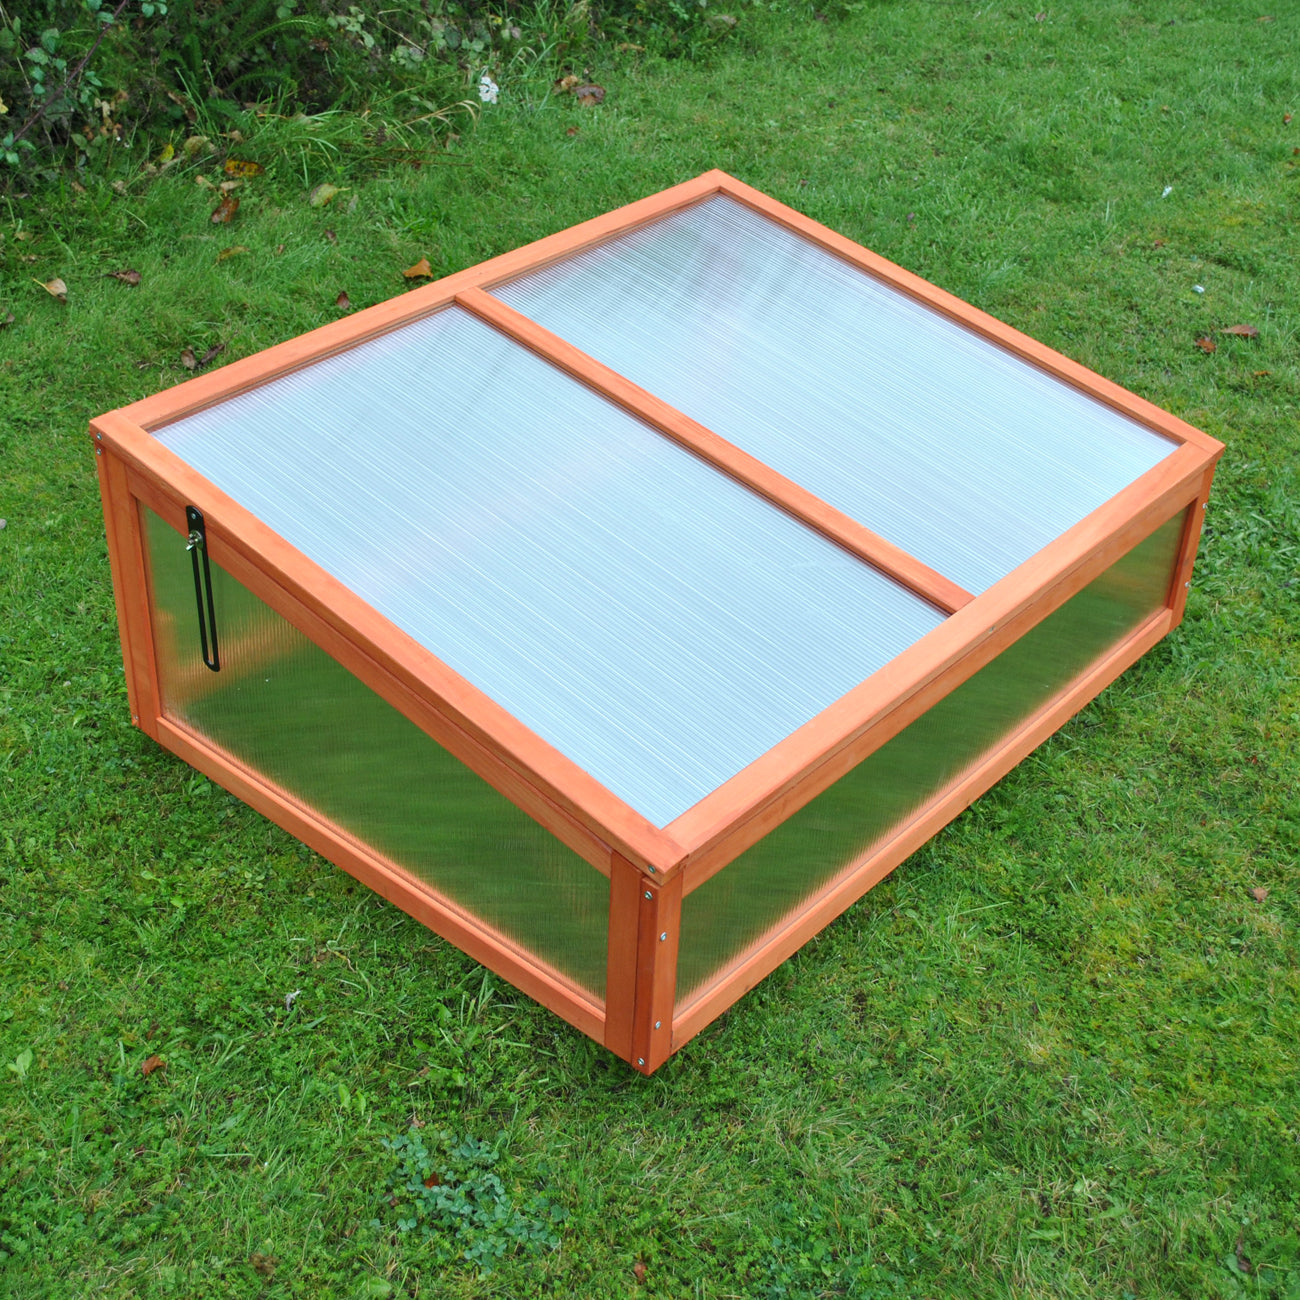 Polycarbonate Cold Frame for Medium Wooden Raised Vegetable Bed Planter